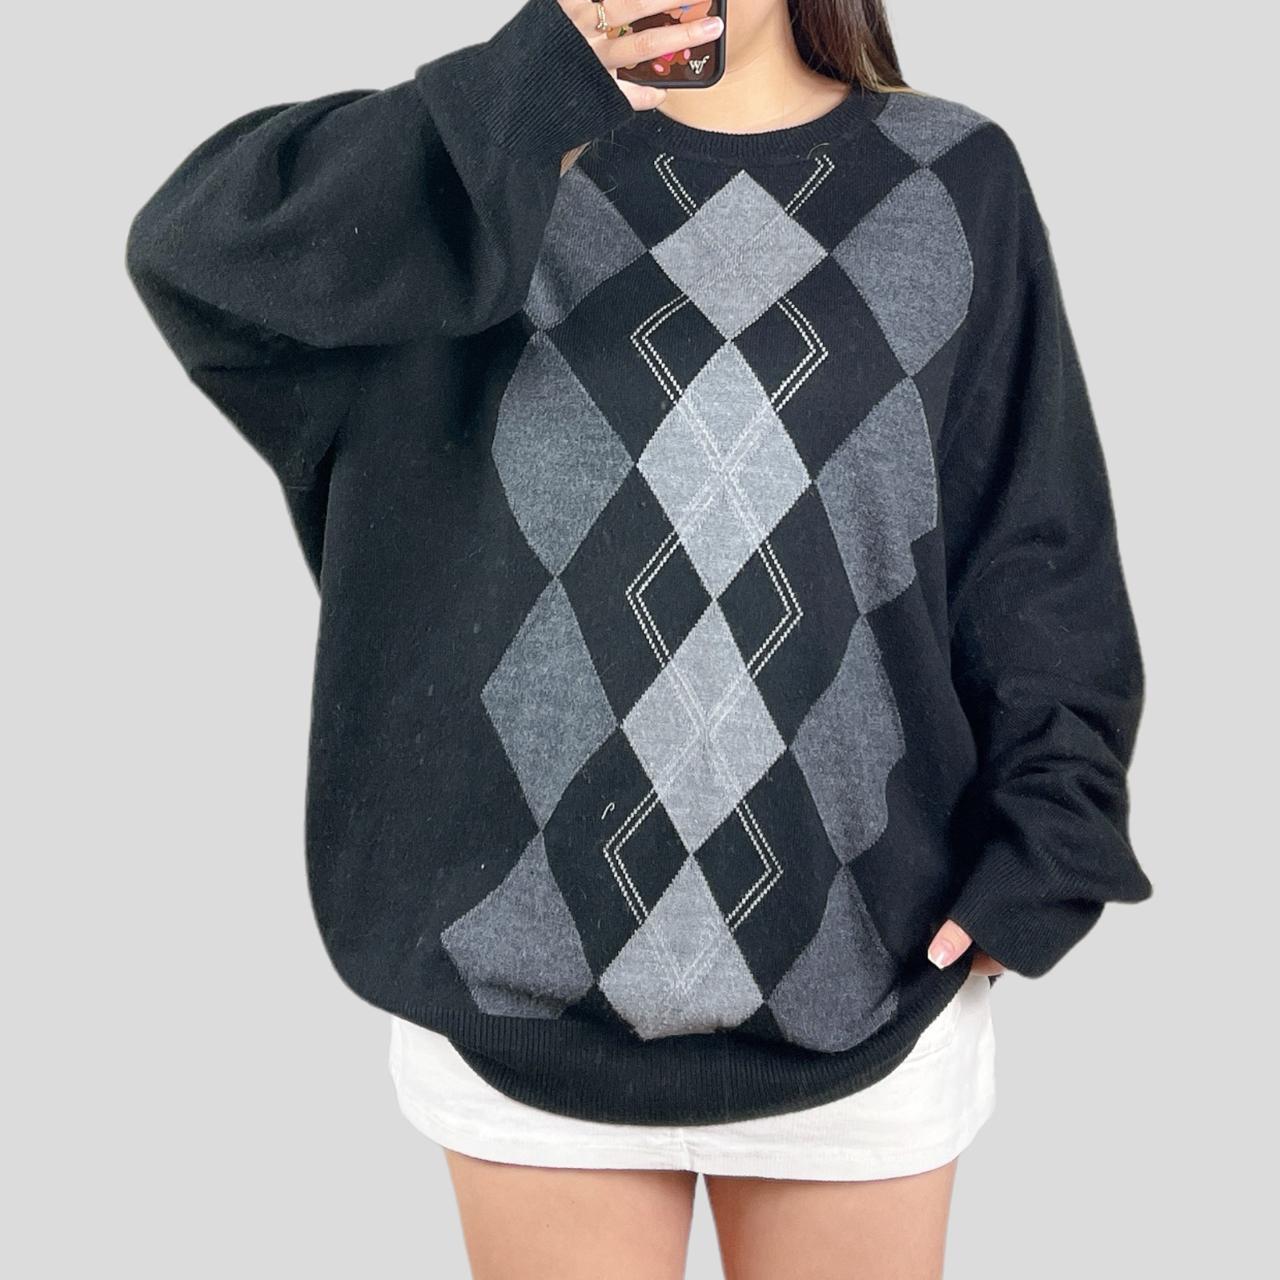 Product Image 3 - preppy argyle oversized sweater

Brand: dockers
Size